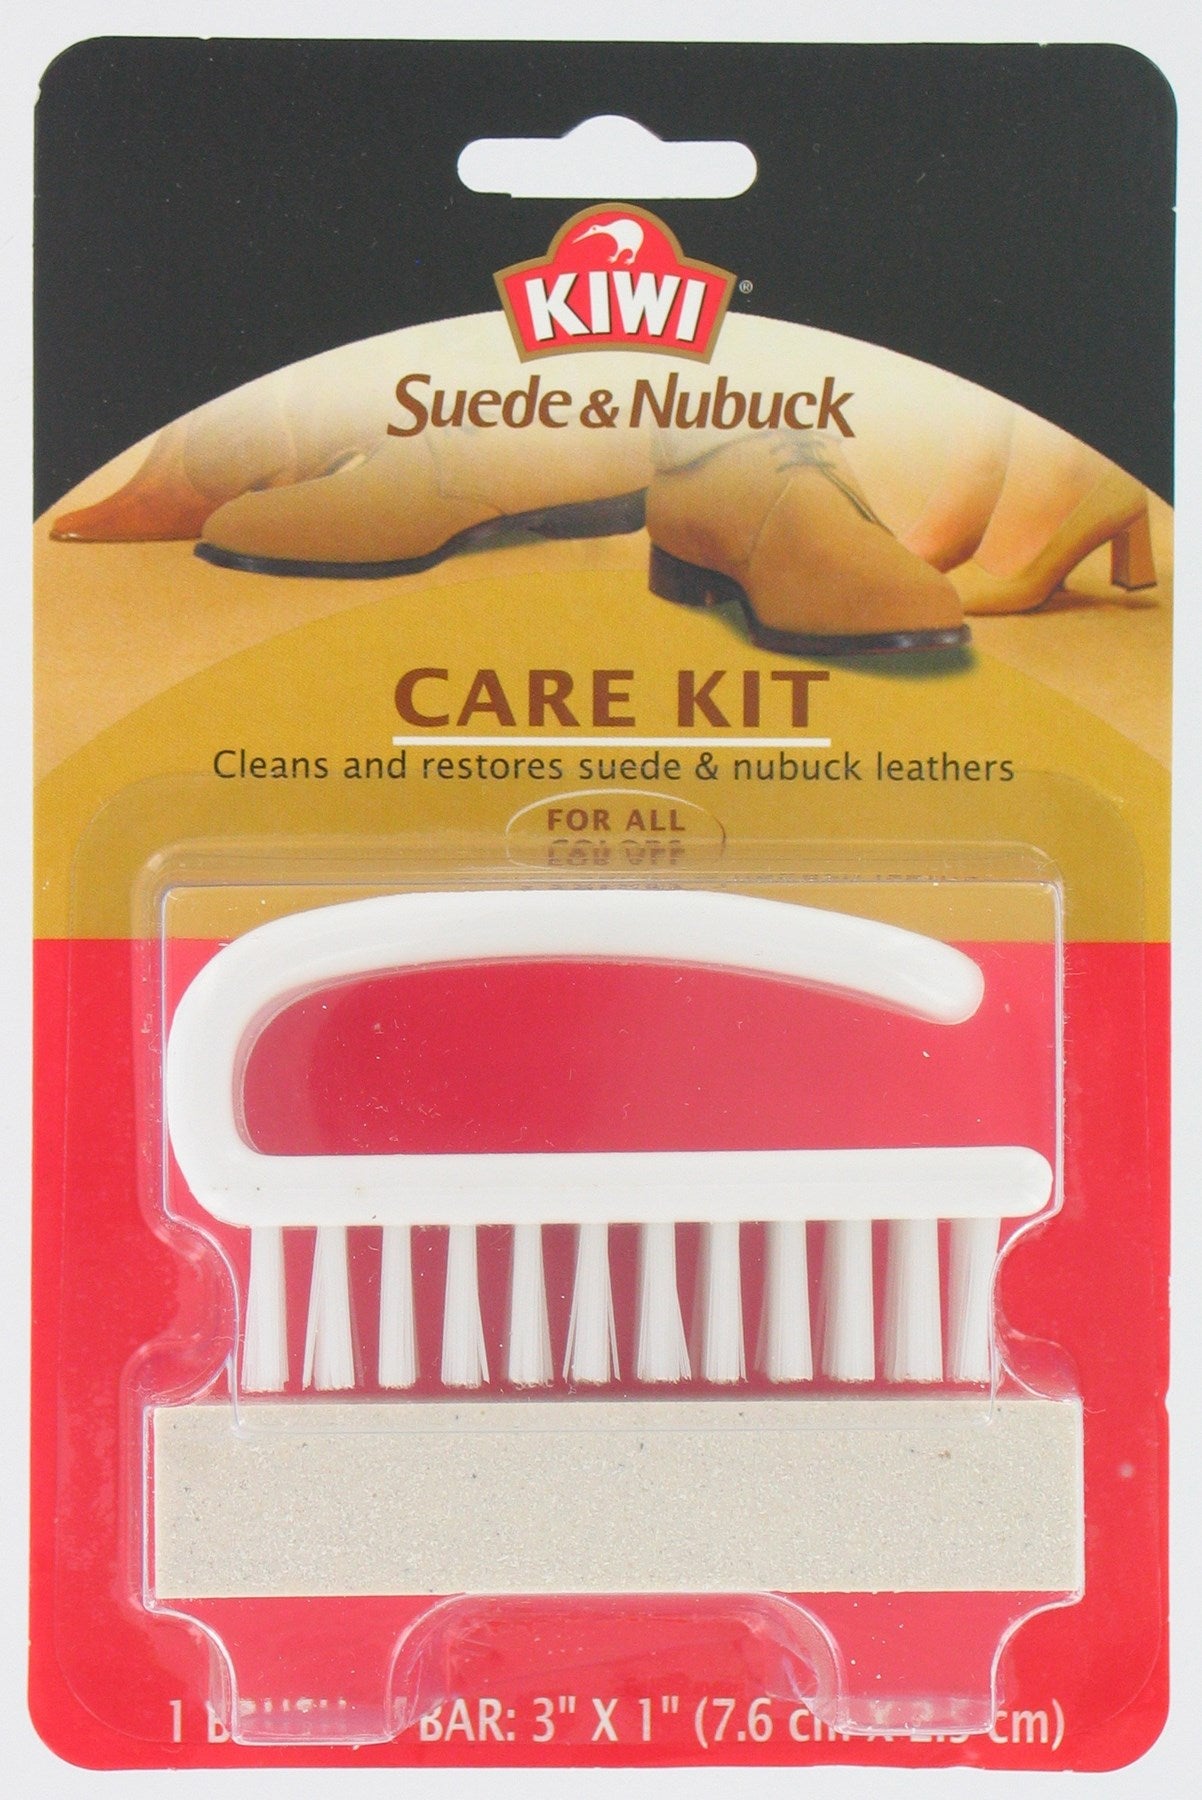 Kiwi, 3 X 1 Suede & Nubuck Care Kit